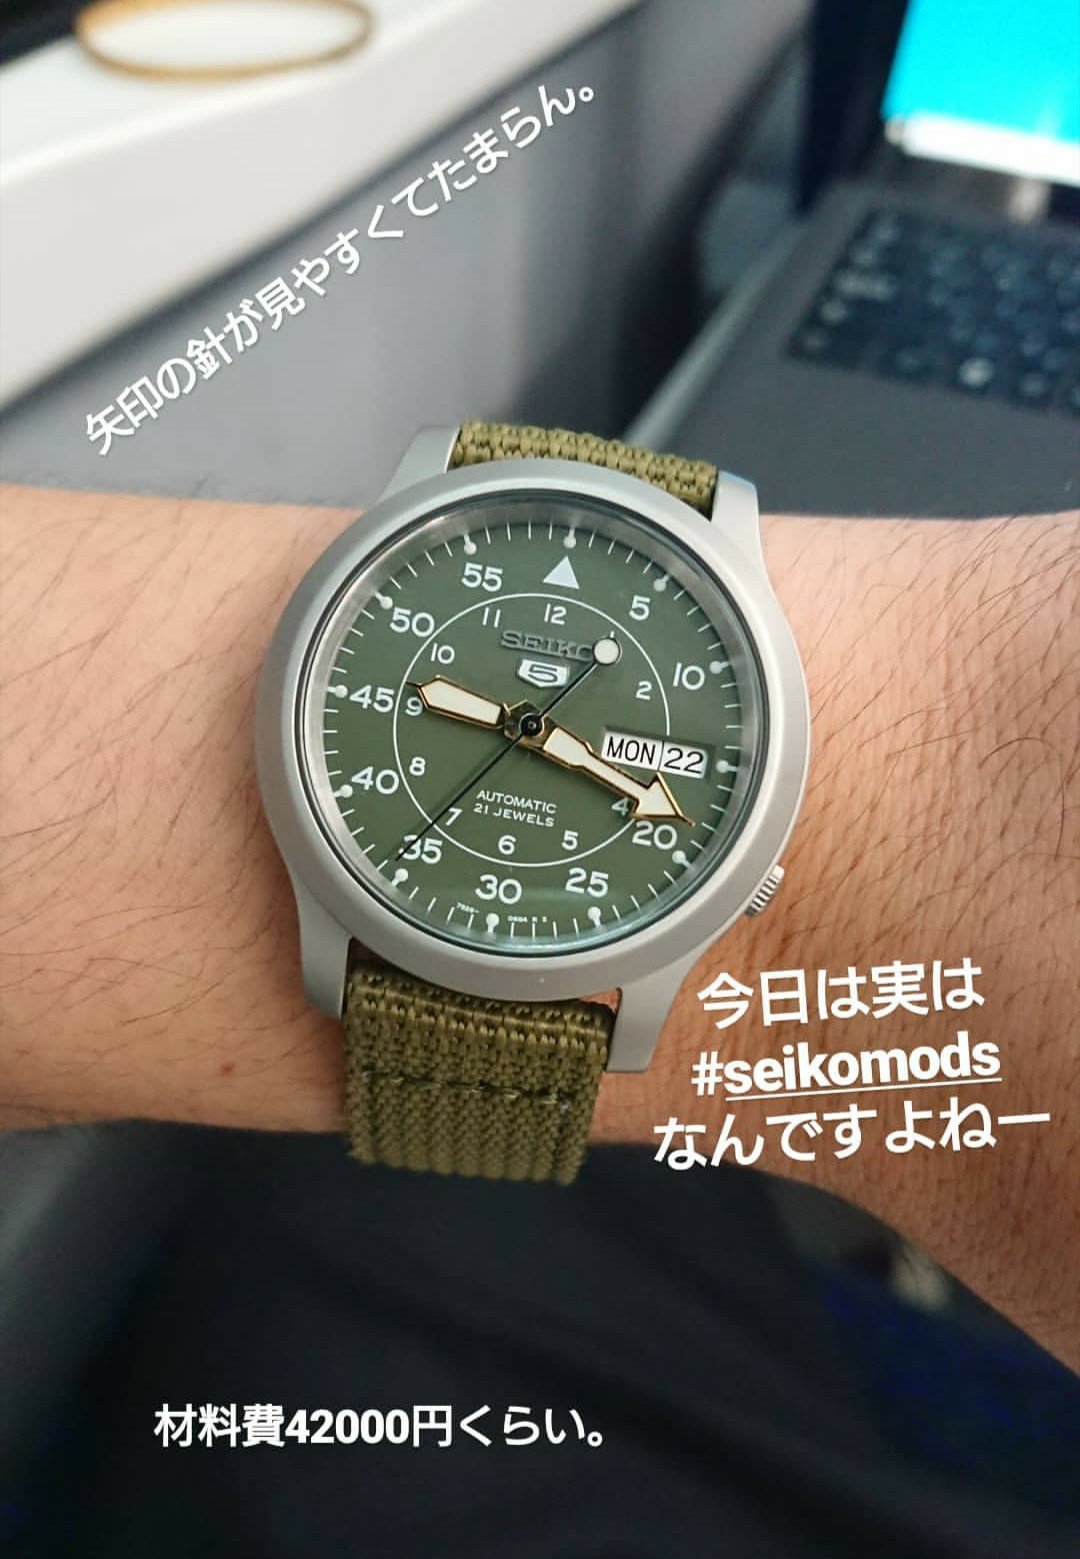 SEIKO MOD】腕時計を改造しよう！佐藤がハマっているSeiko Modとは 